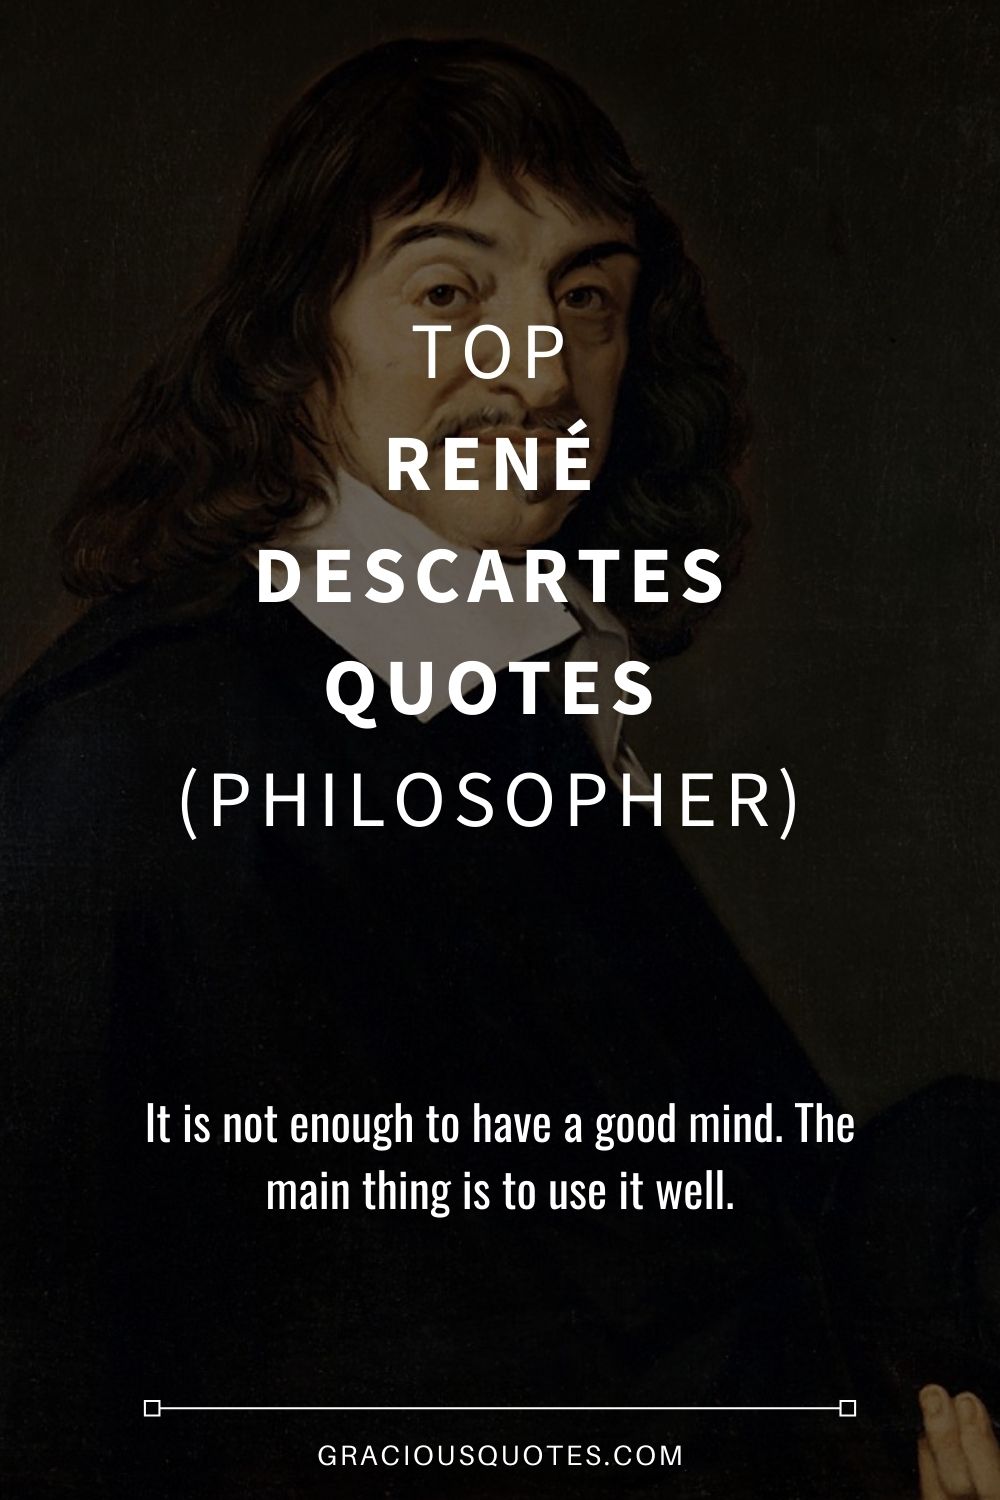 Top René Descartes Quotes (PHILOSOPHER) - Gracious Quotes